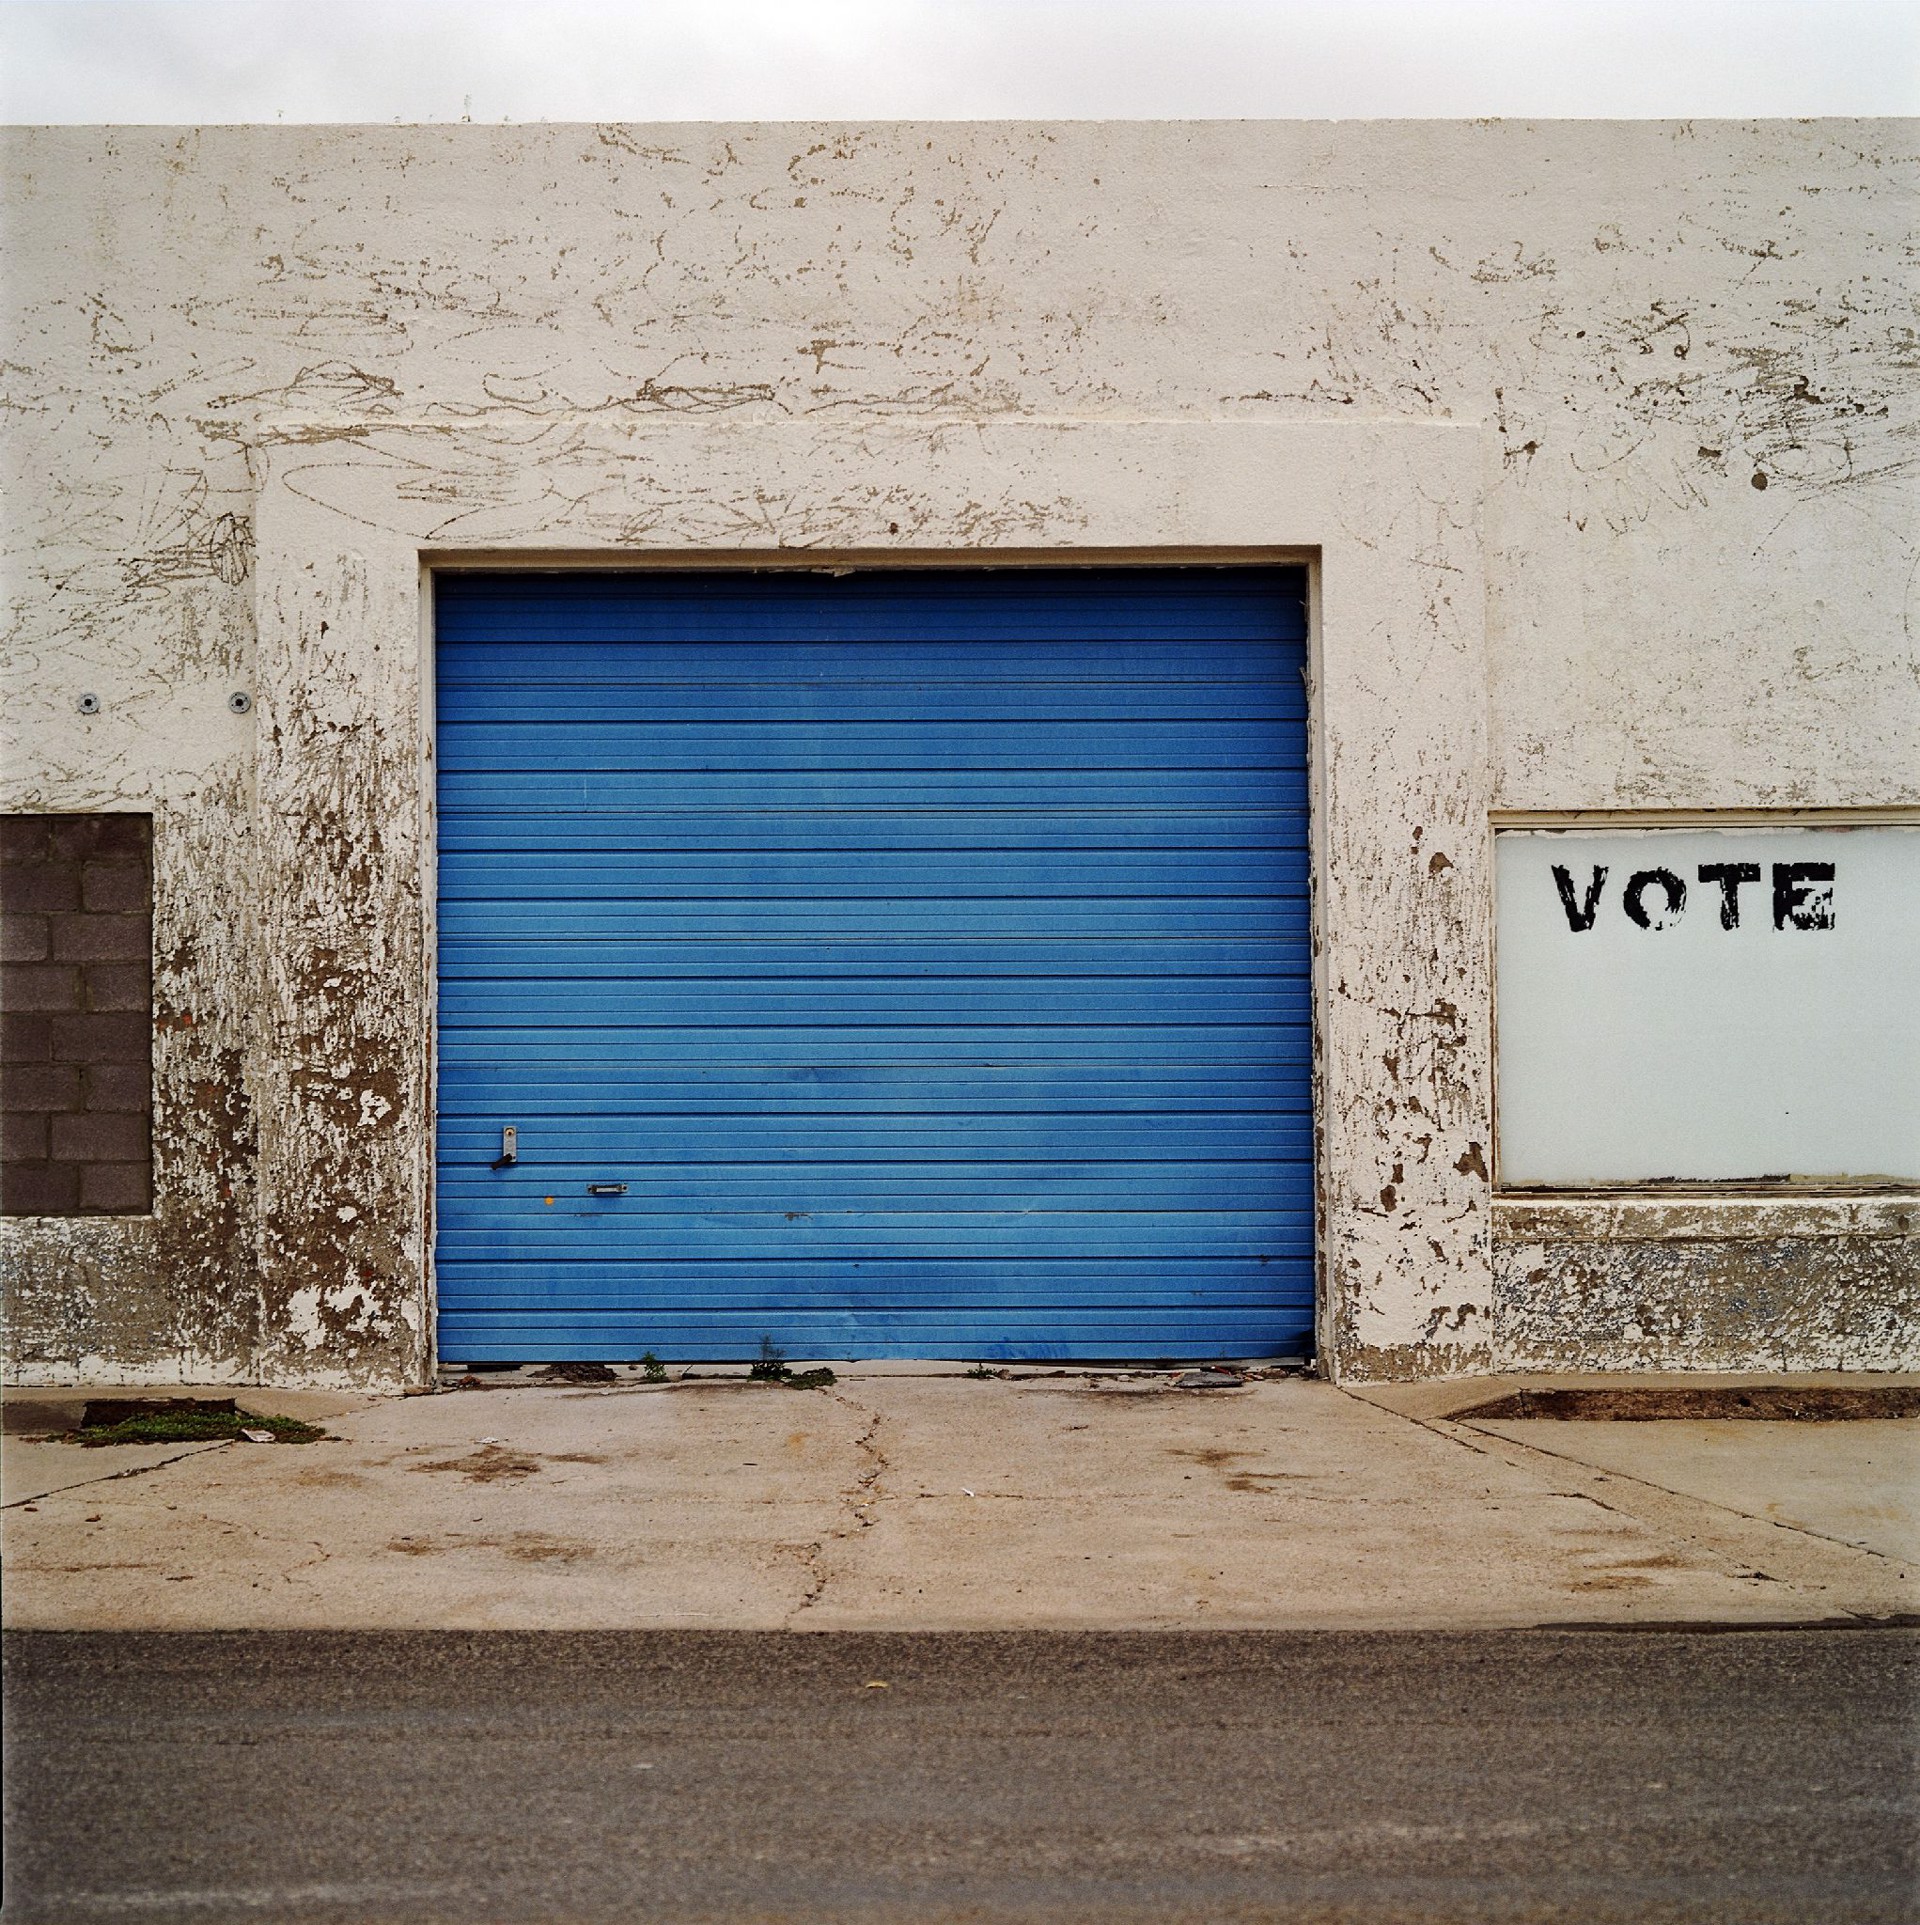 Vote, Marfa Texas by Allison V. Smith